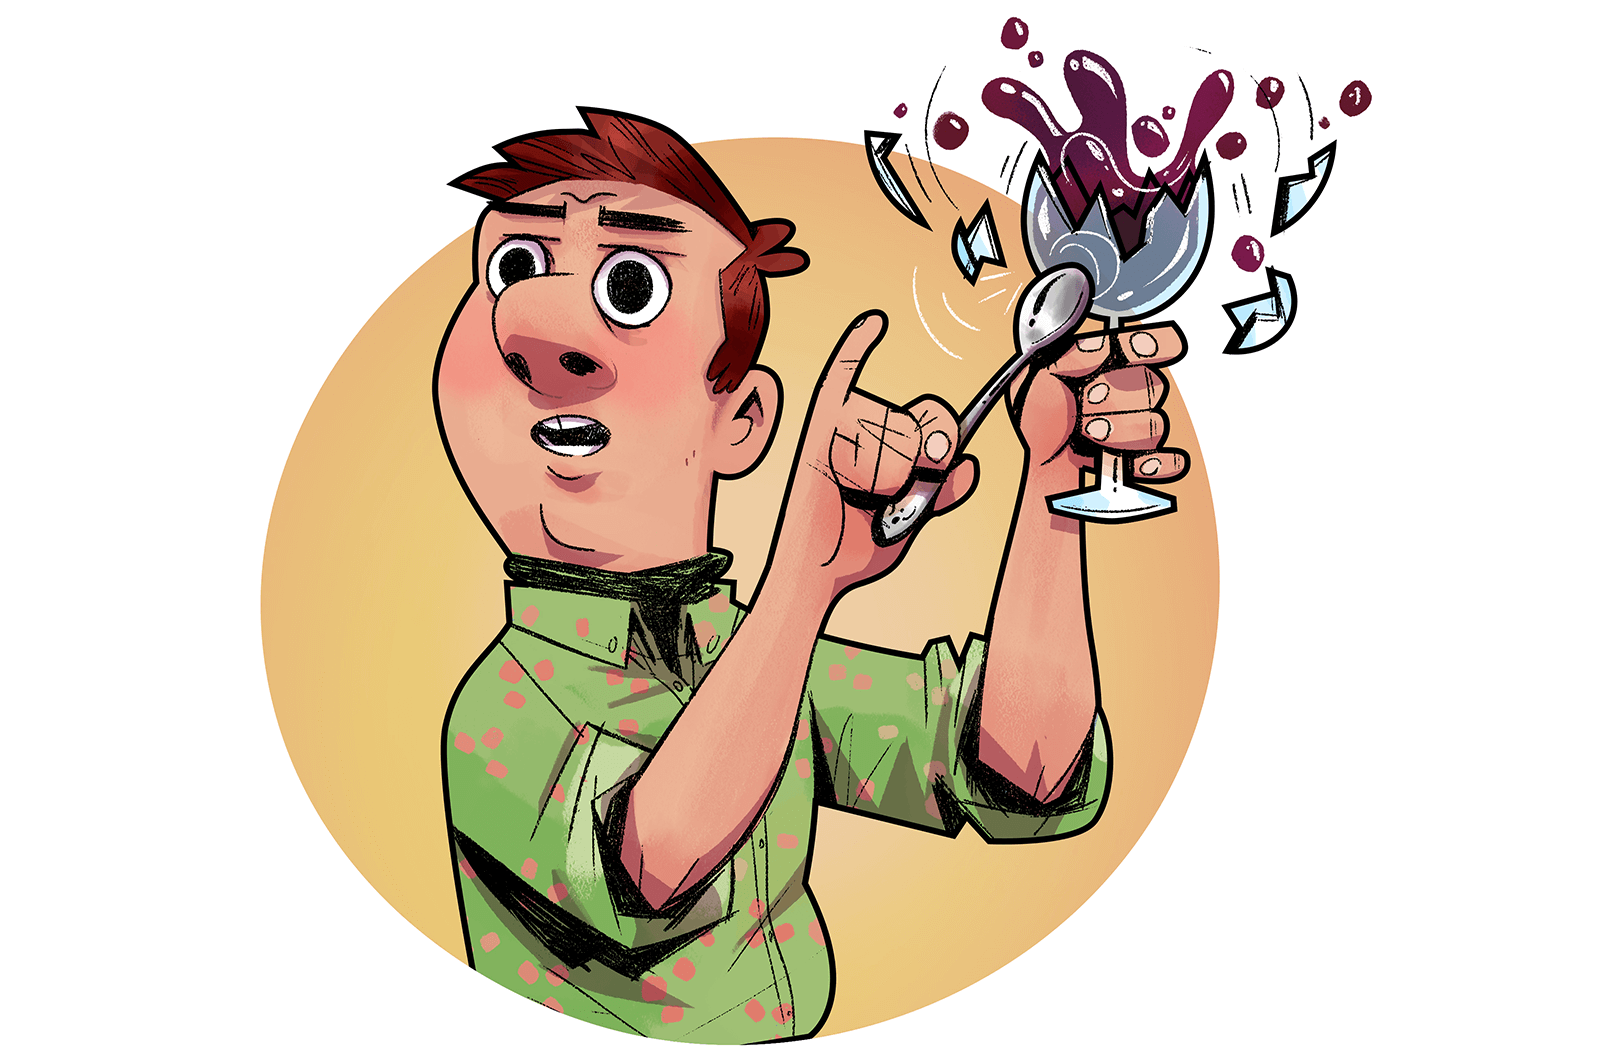 Illustration of man in green shirt breaking wine glass